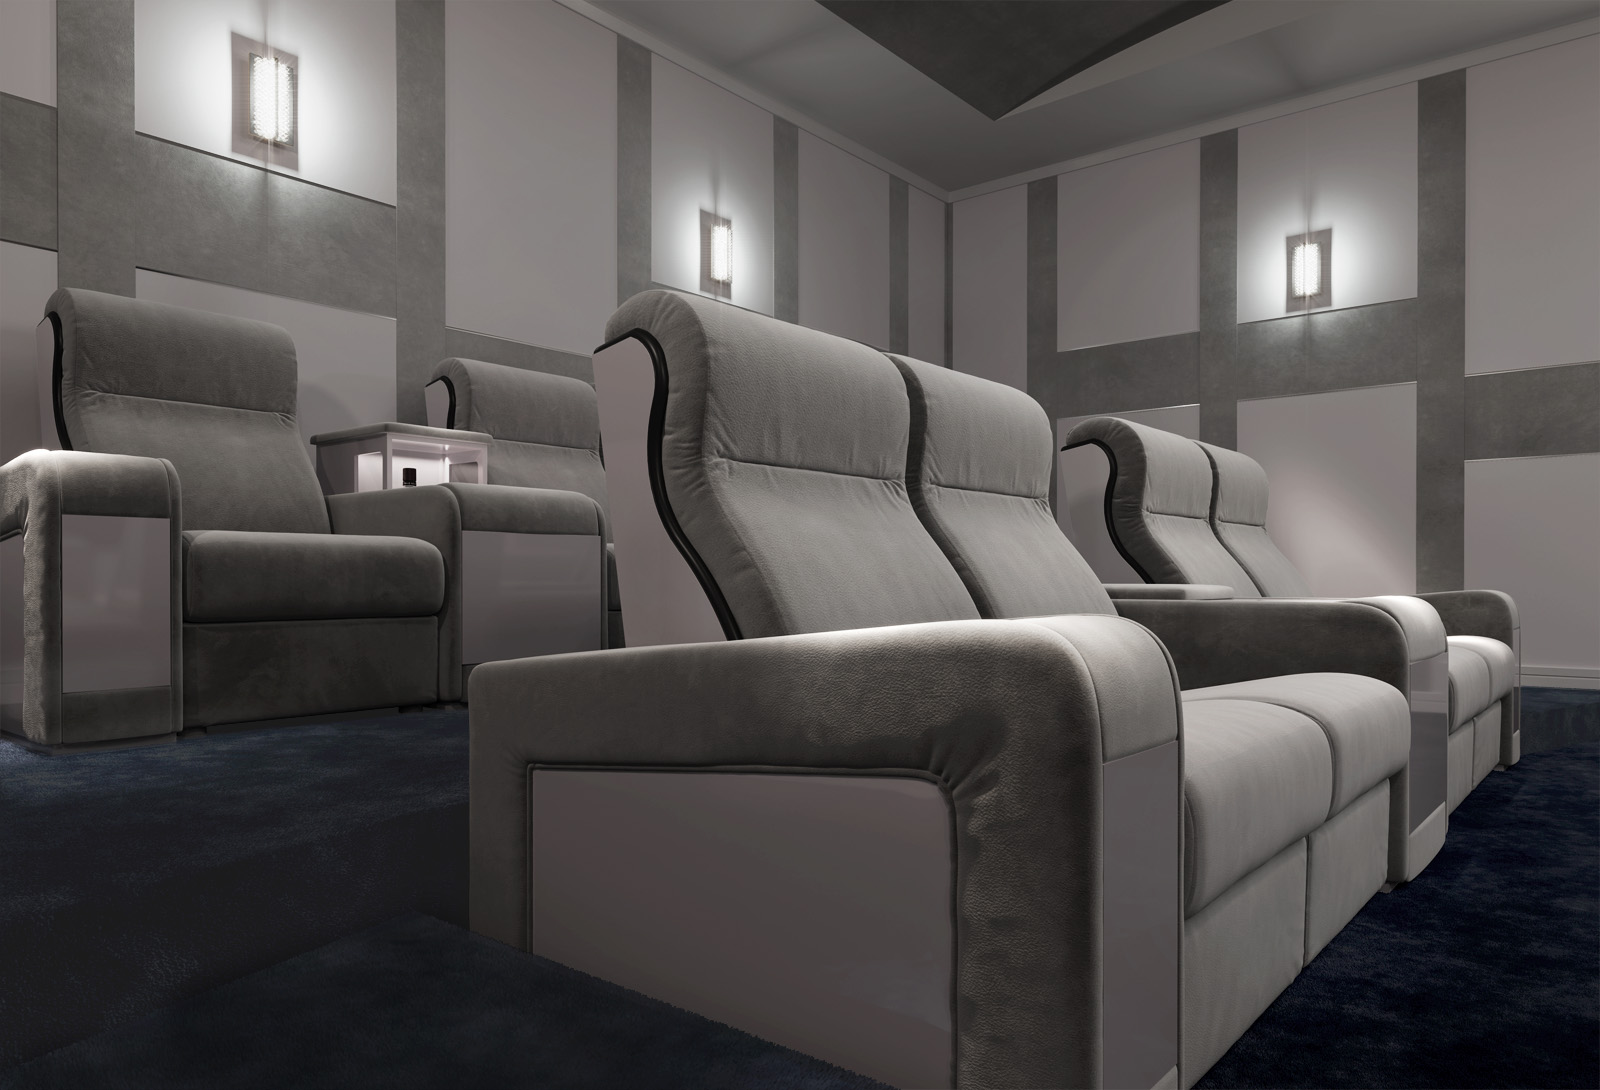 luxury cinema seats producedvismara design in italy